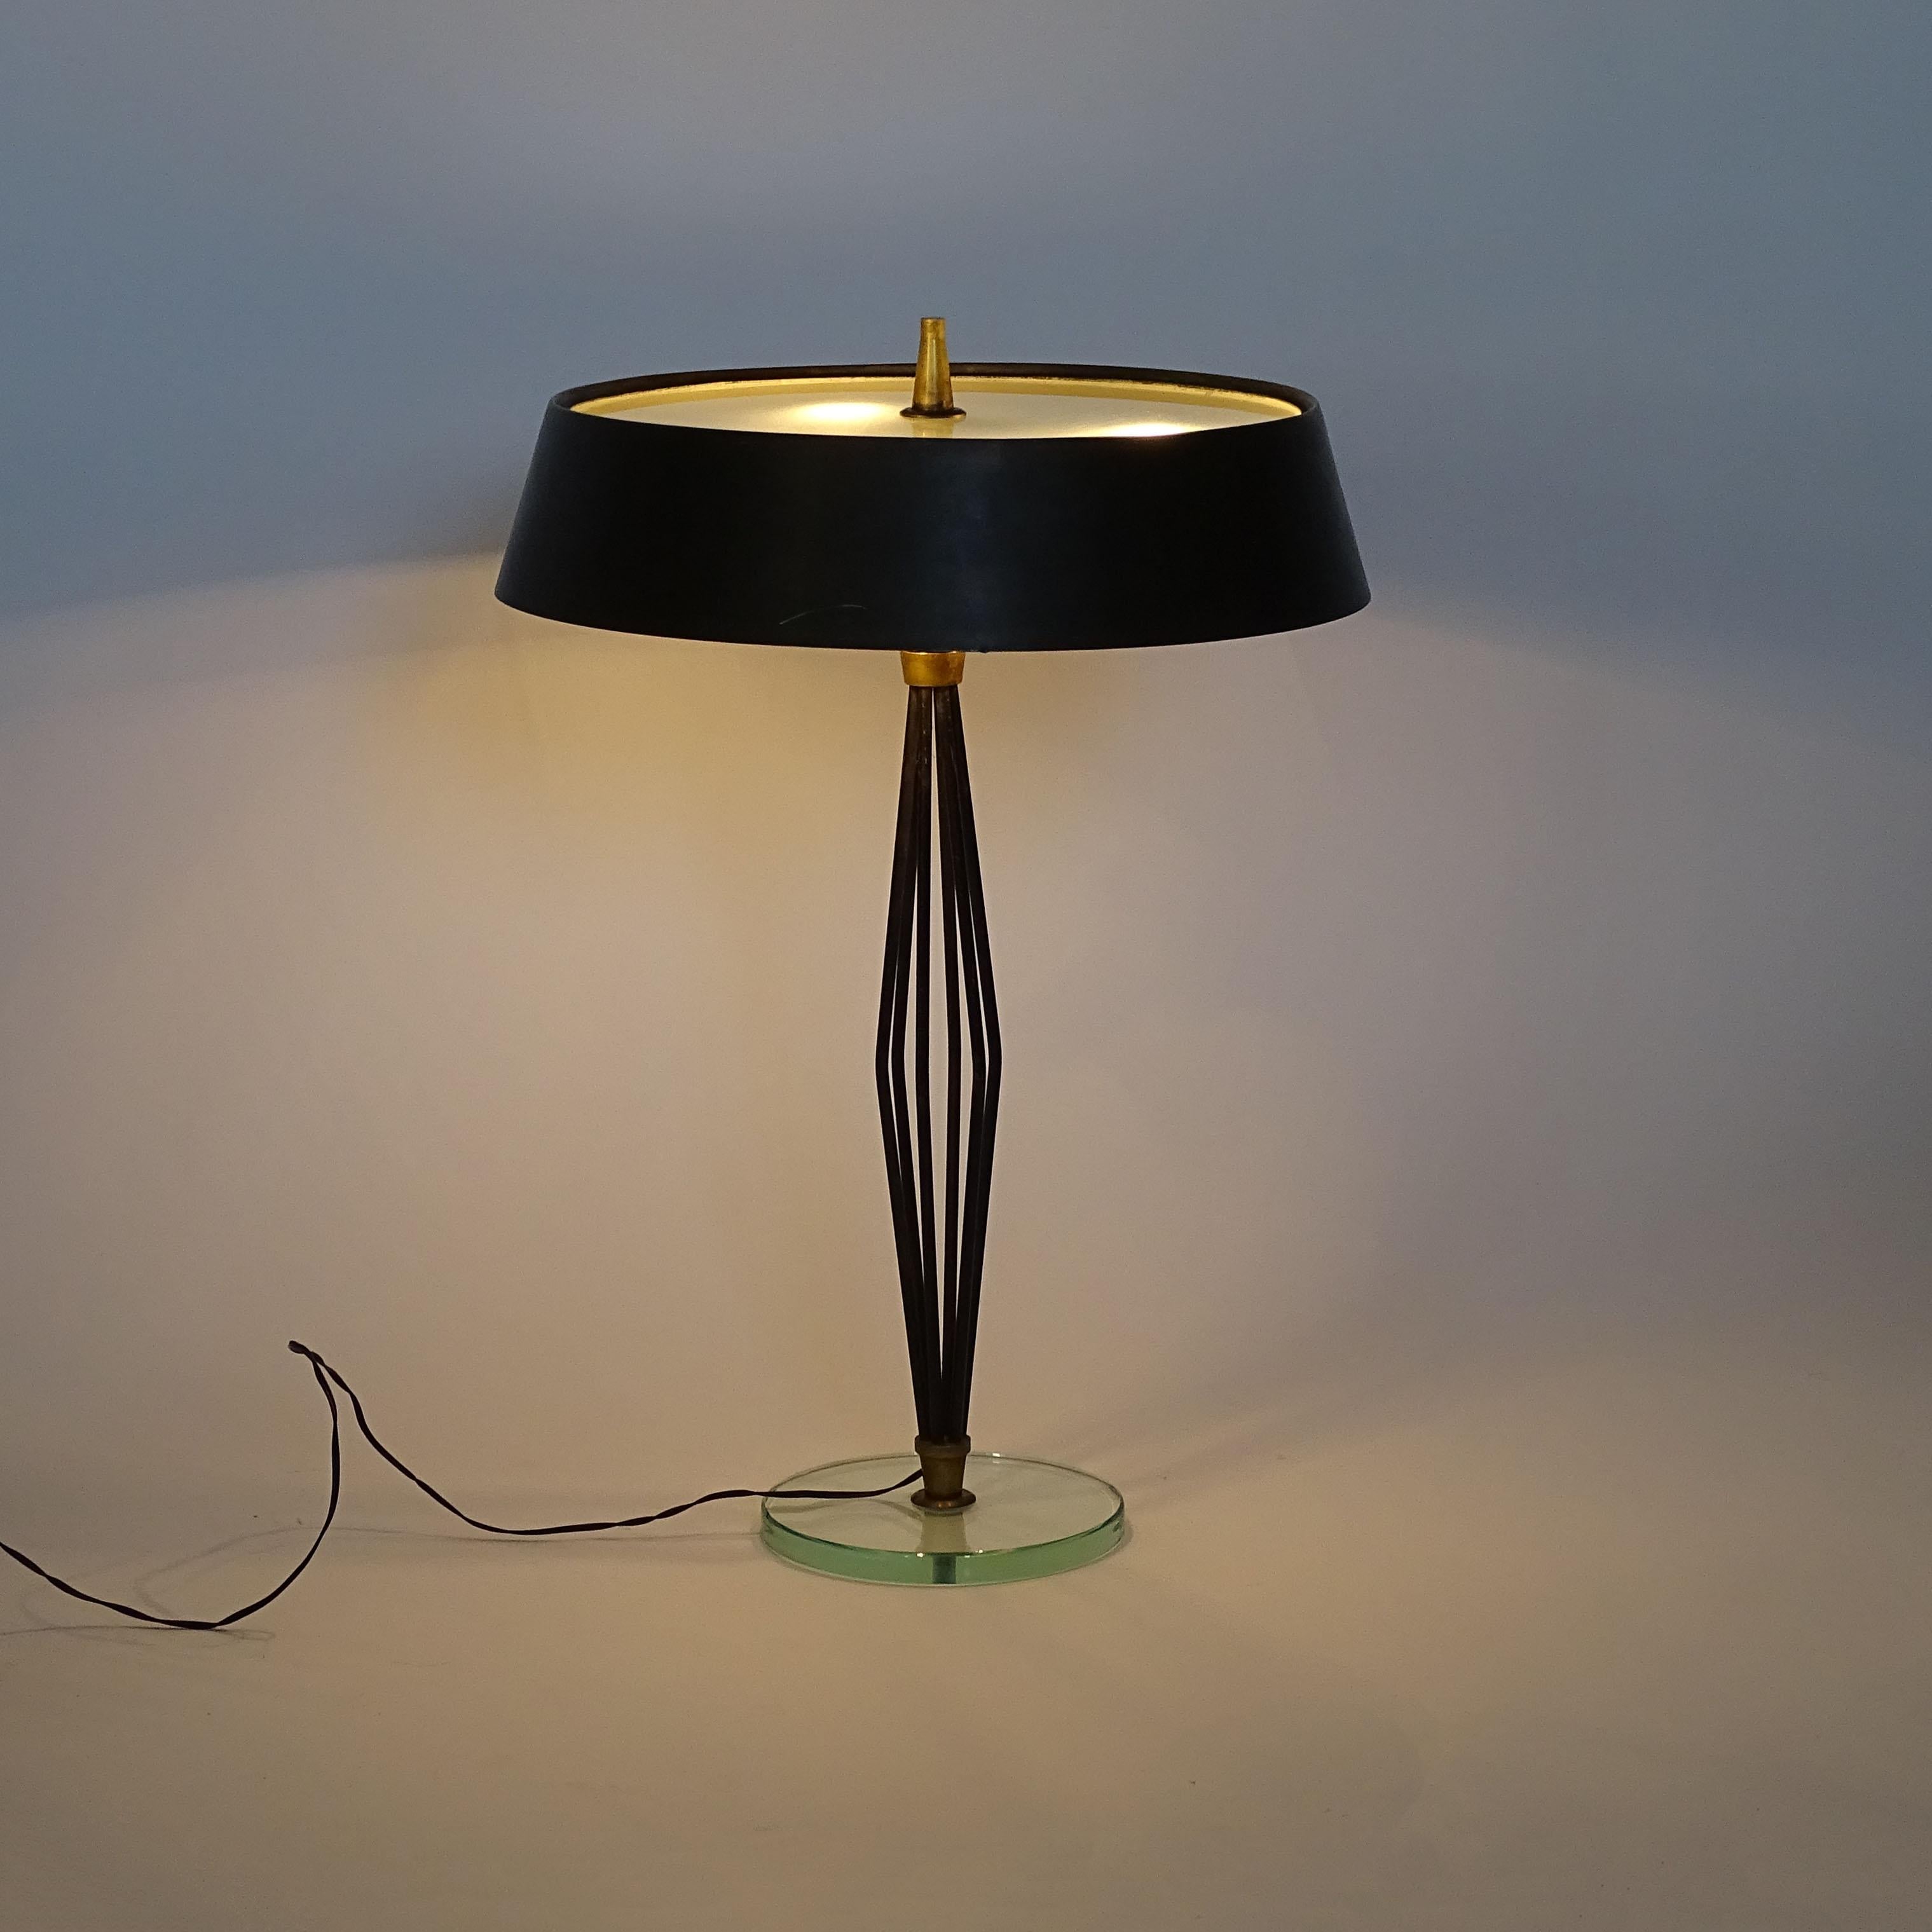 Fontana Arte Model 1959 Table Lamp, Italy 1950s.